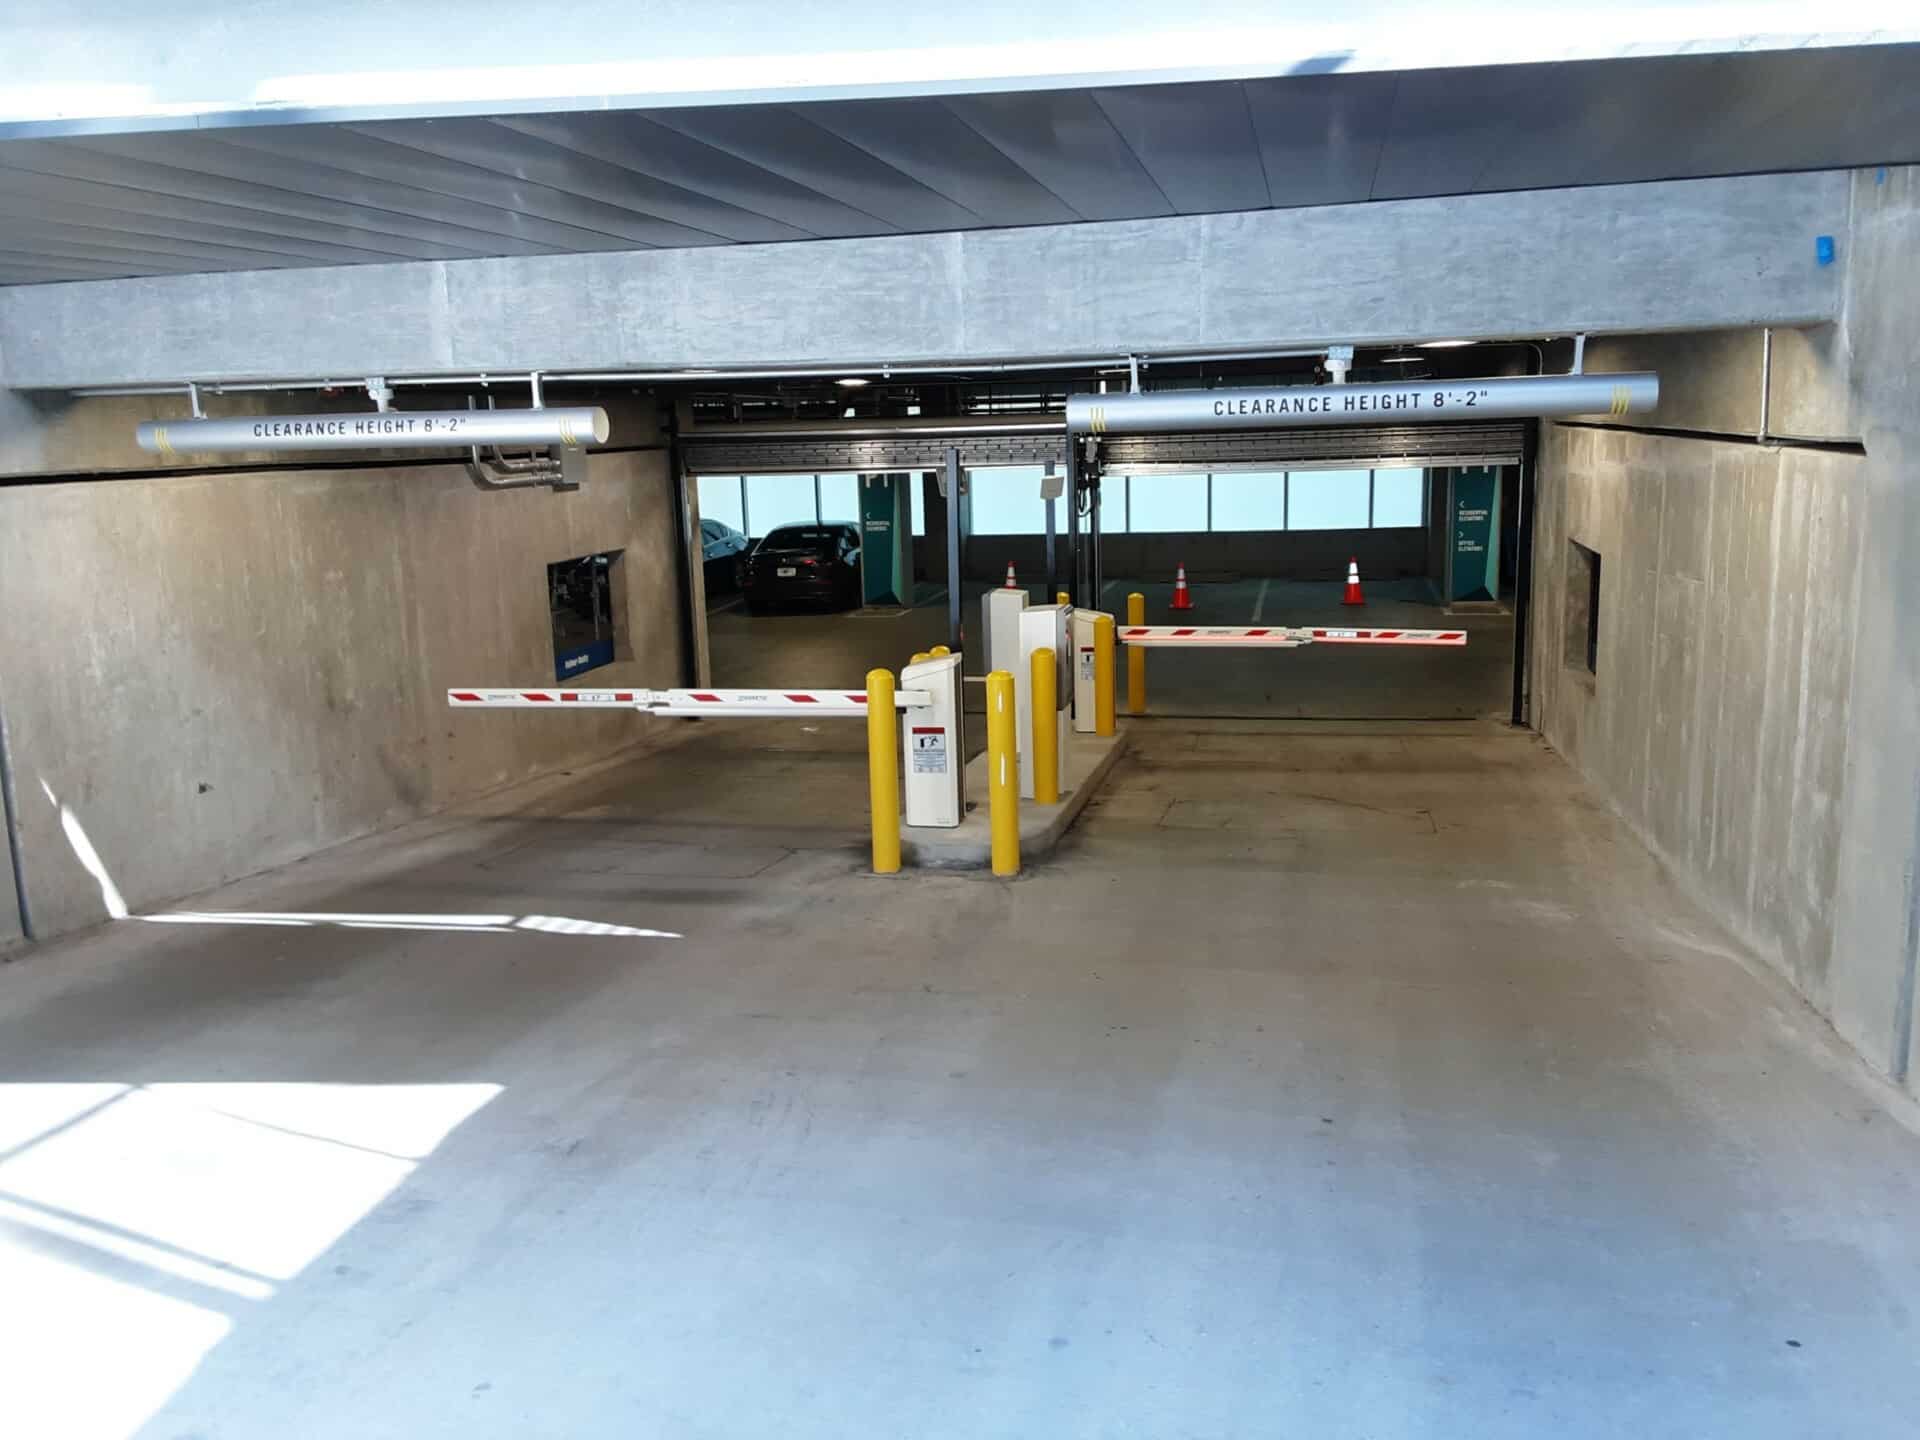 Underground parking garage entrance and exit.